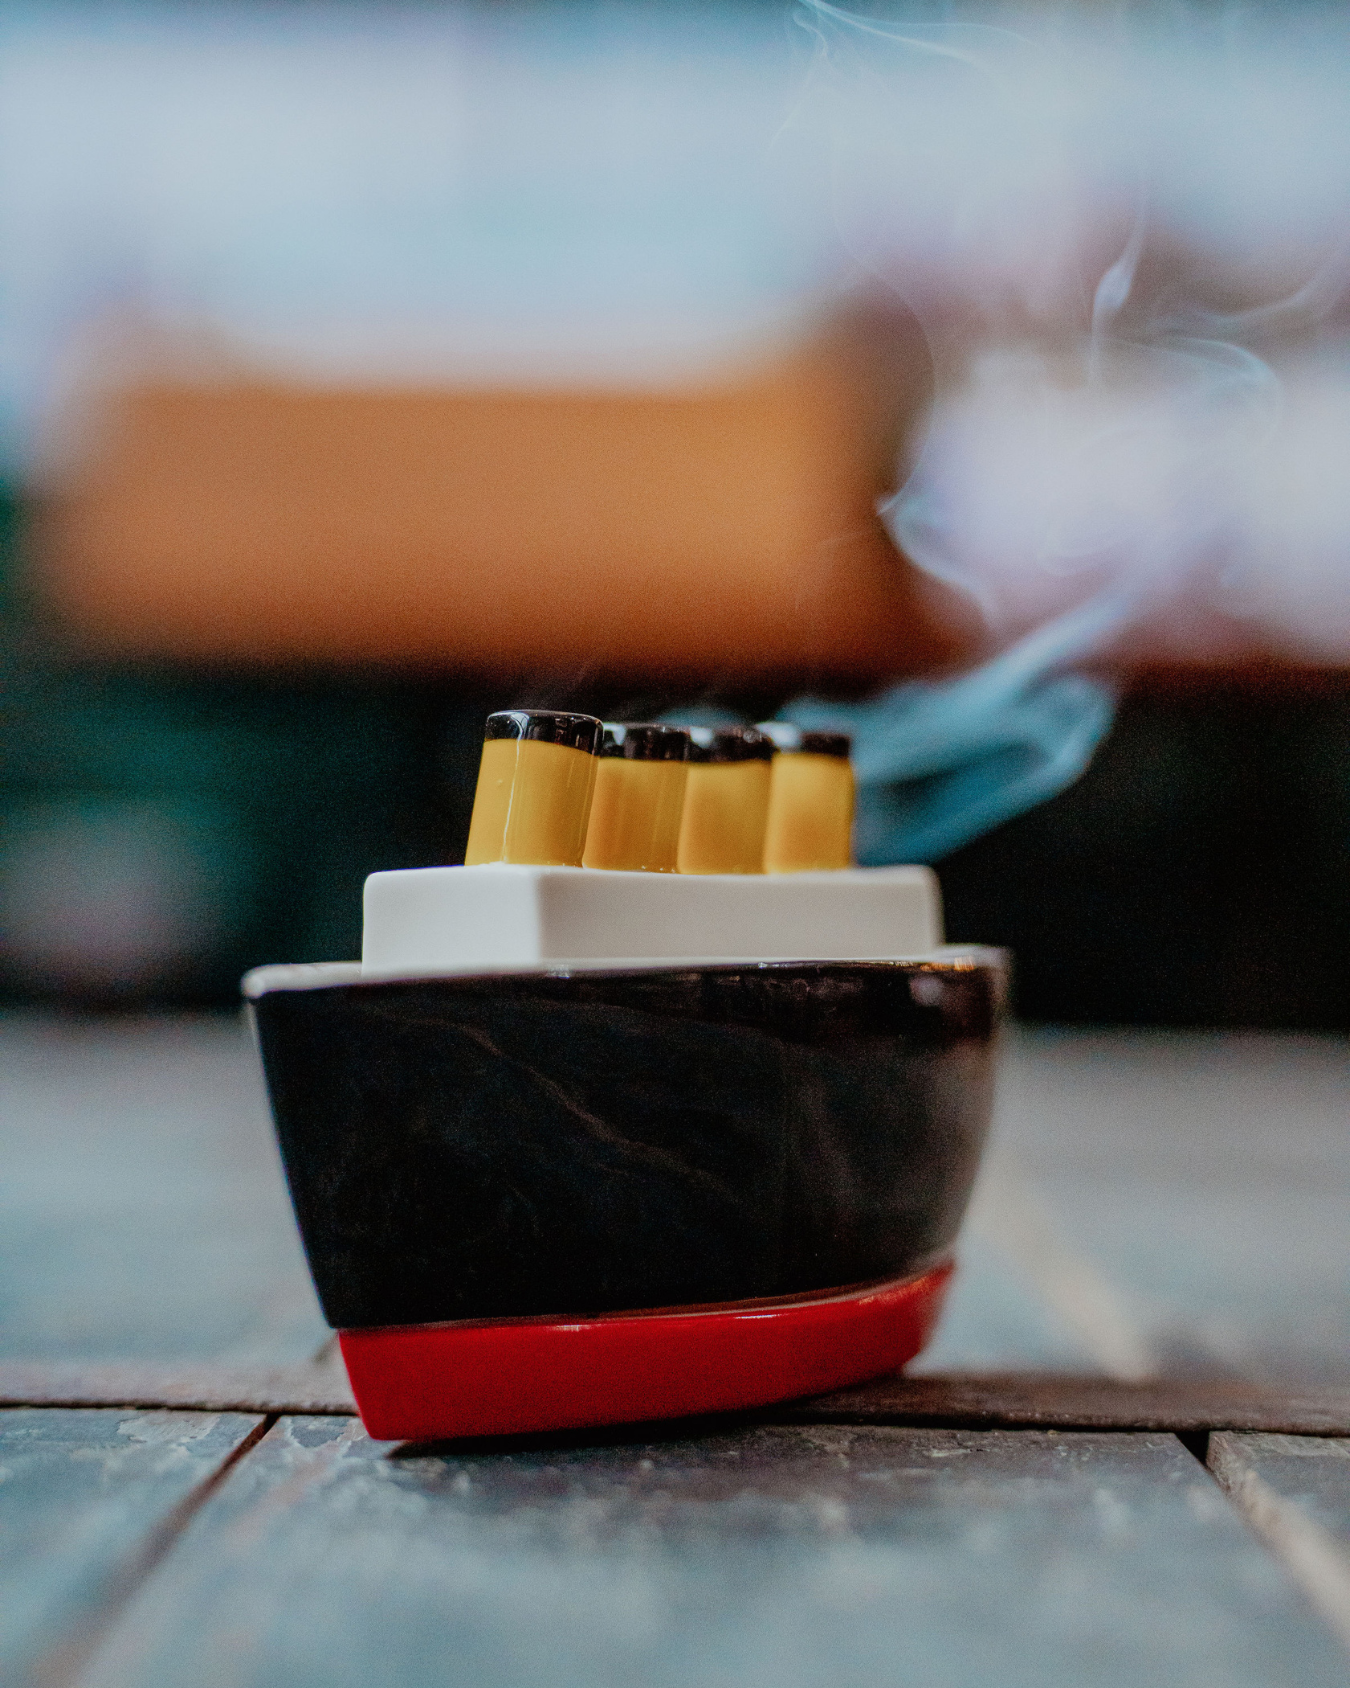 Tiny Titanic Incense Burner